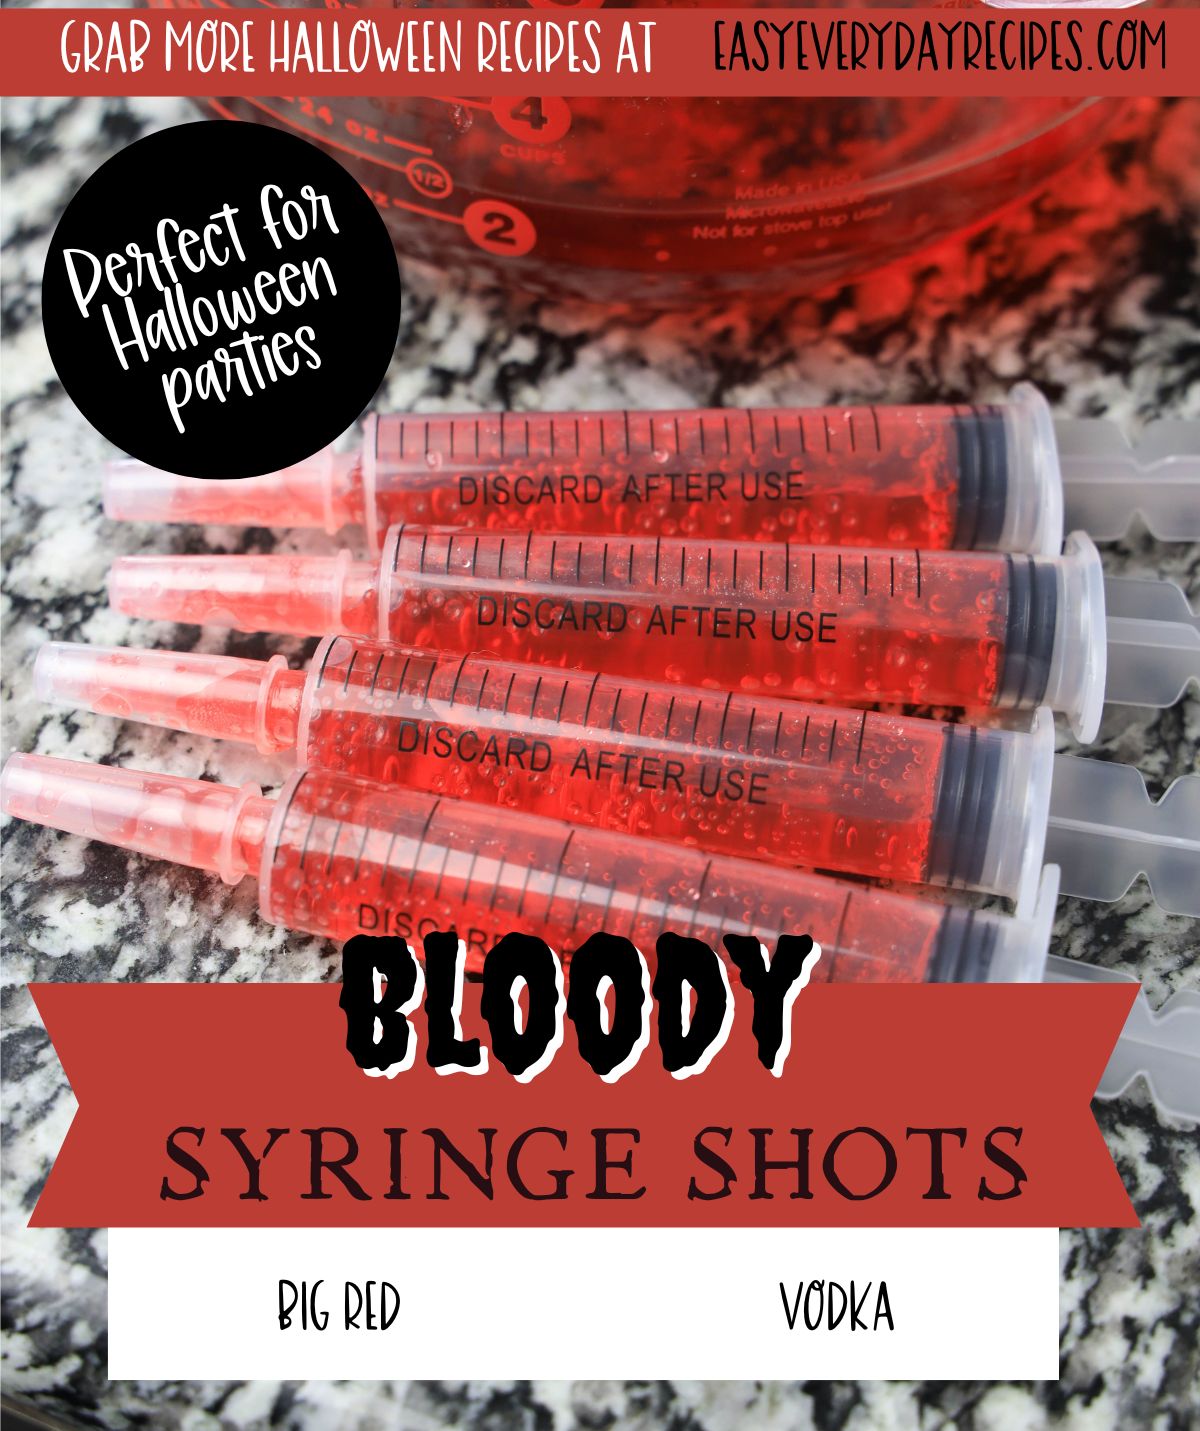 Bloody syringe shots for halloween.